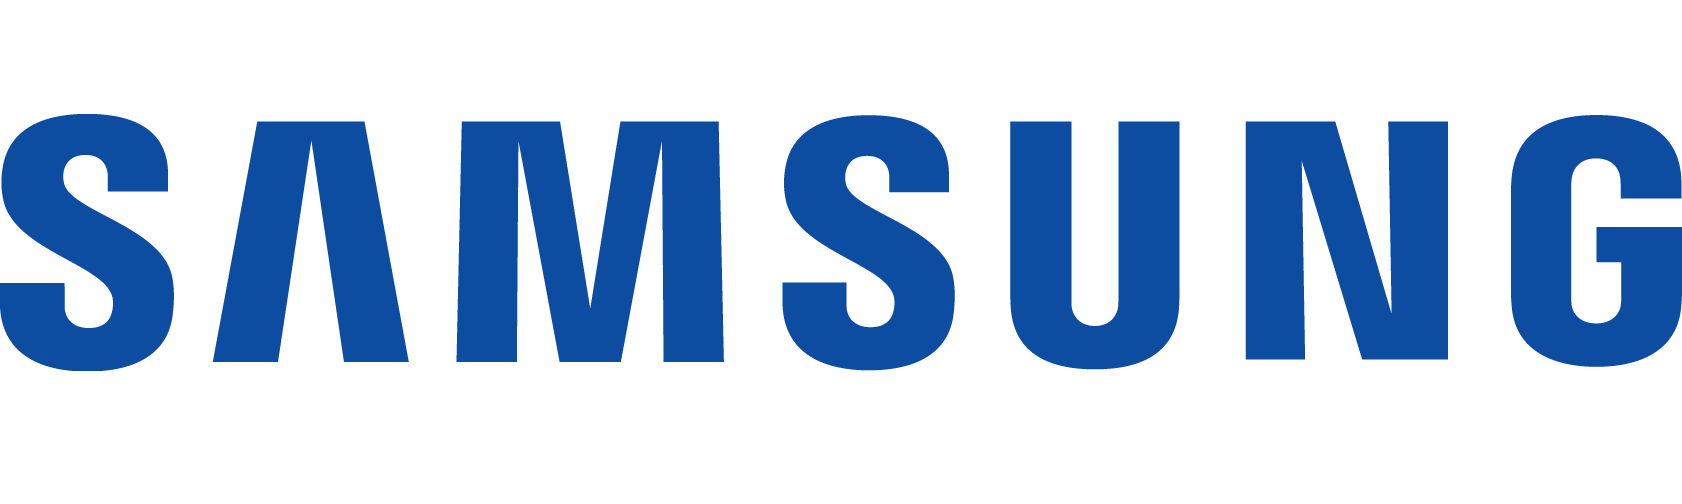 Kisspng Samsung Galaxy S7 Samsung Galaxy S6 Logo Samsung E Samsung 5abe275edf3c99.1464415215224113589144